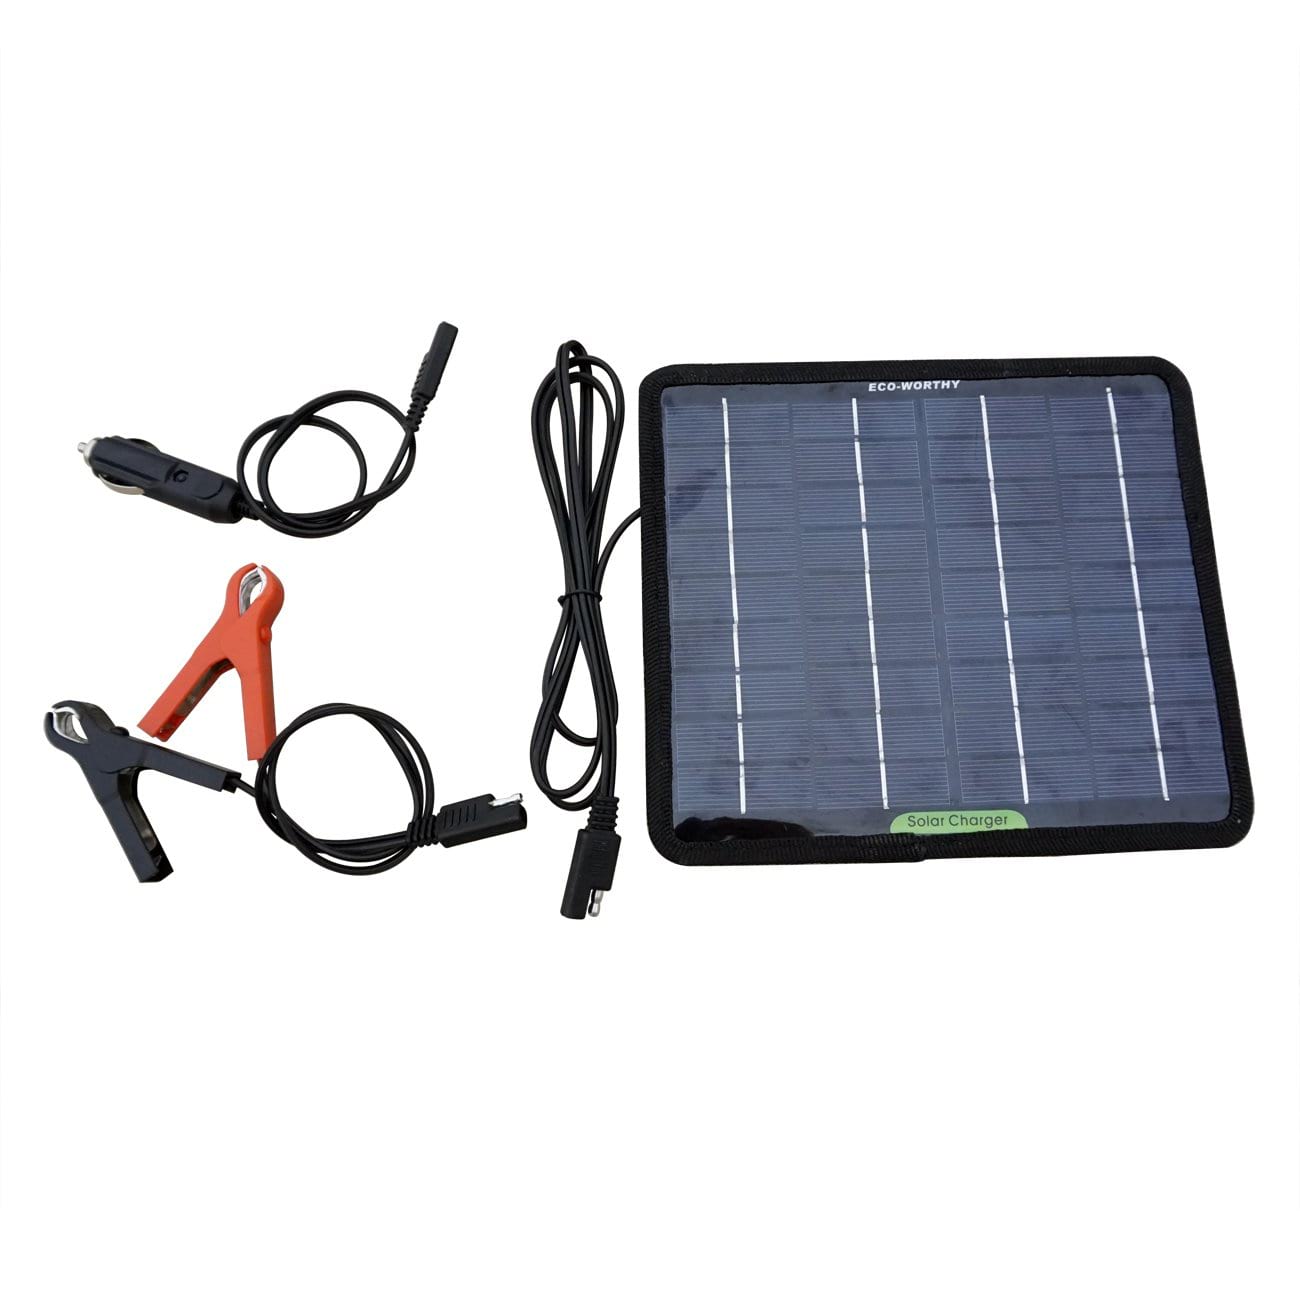 ECO-WORTHY 5 W Portable Solar Panel